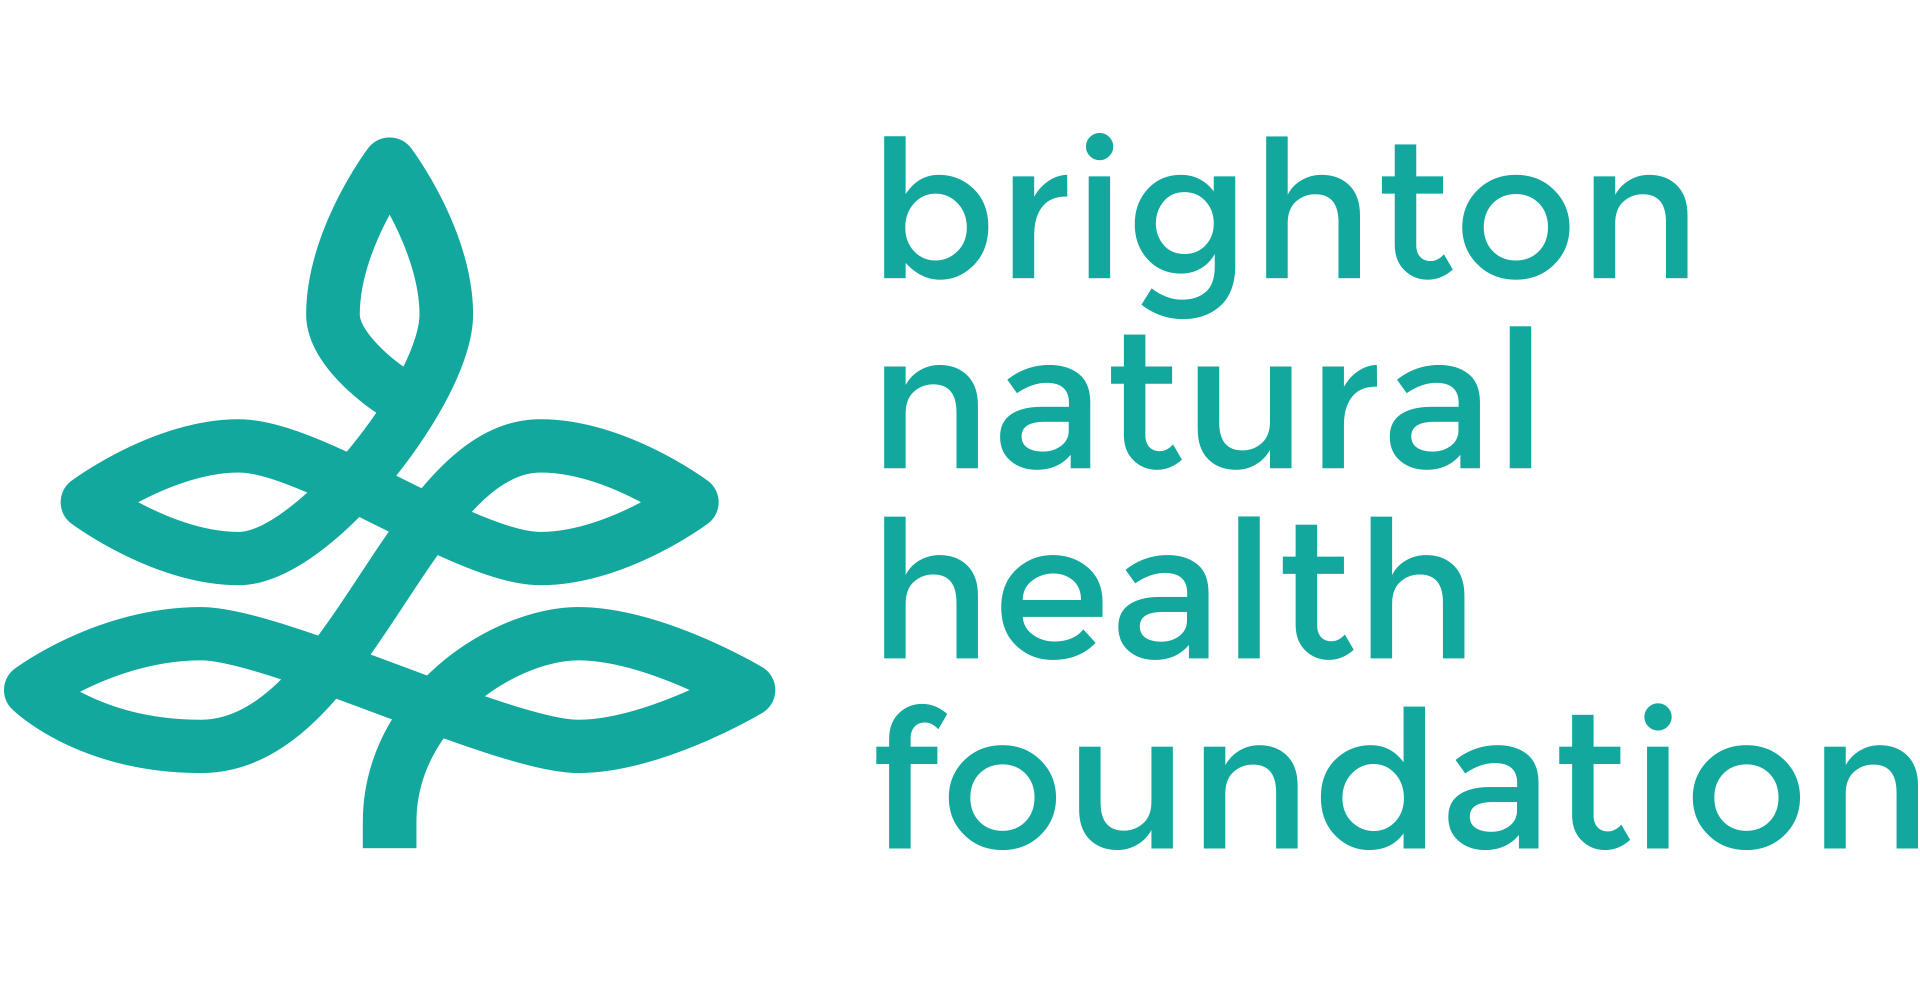 BNHF Brighton Natural Health Foundation Logo